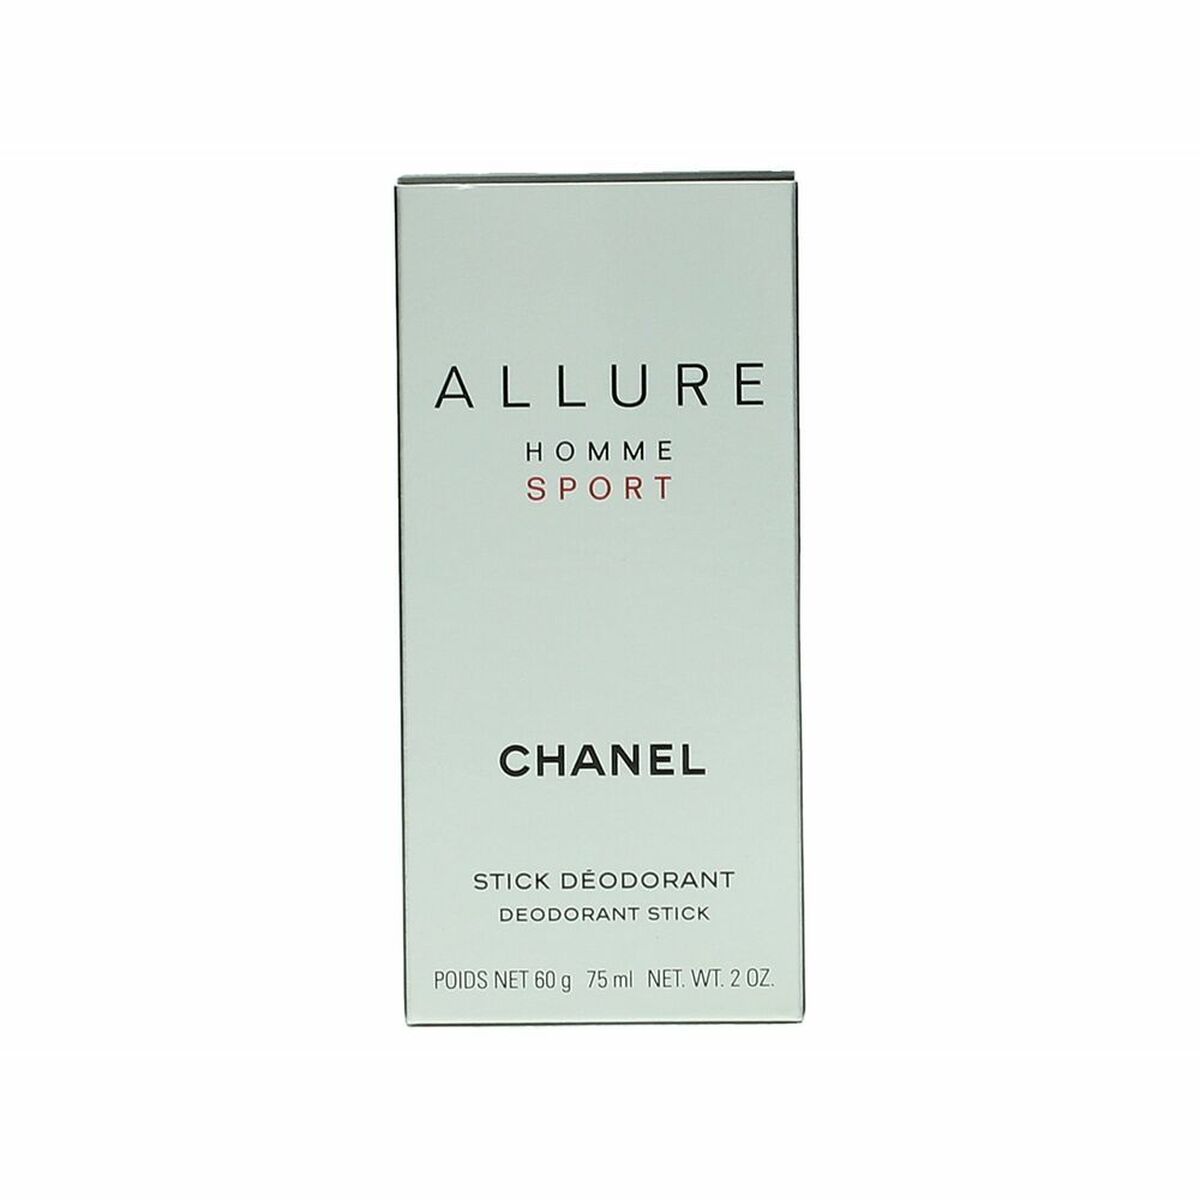 Chanel Allure Homme Sport Deodorant Stick 75ml/2oz 